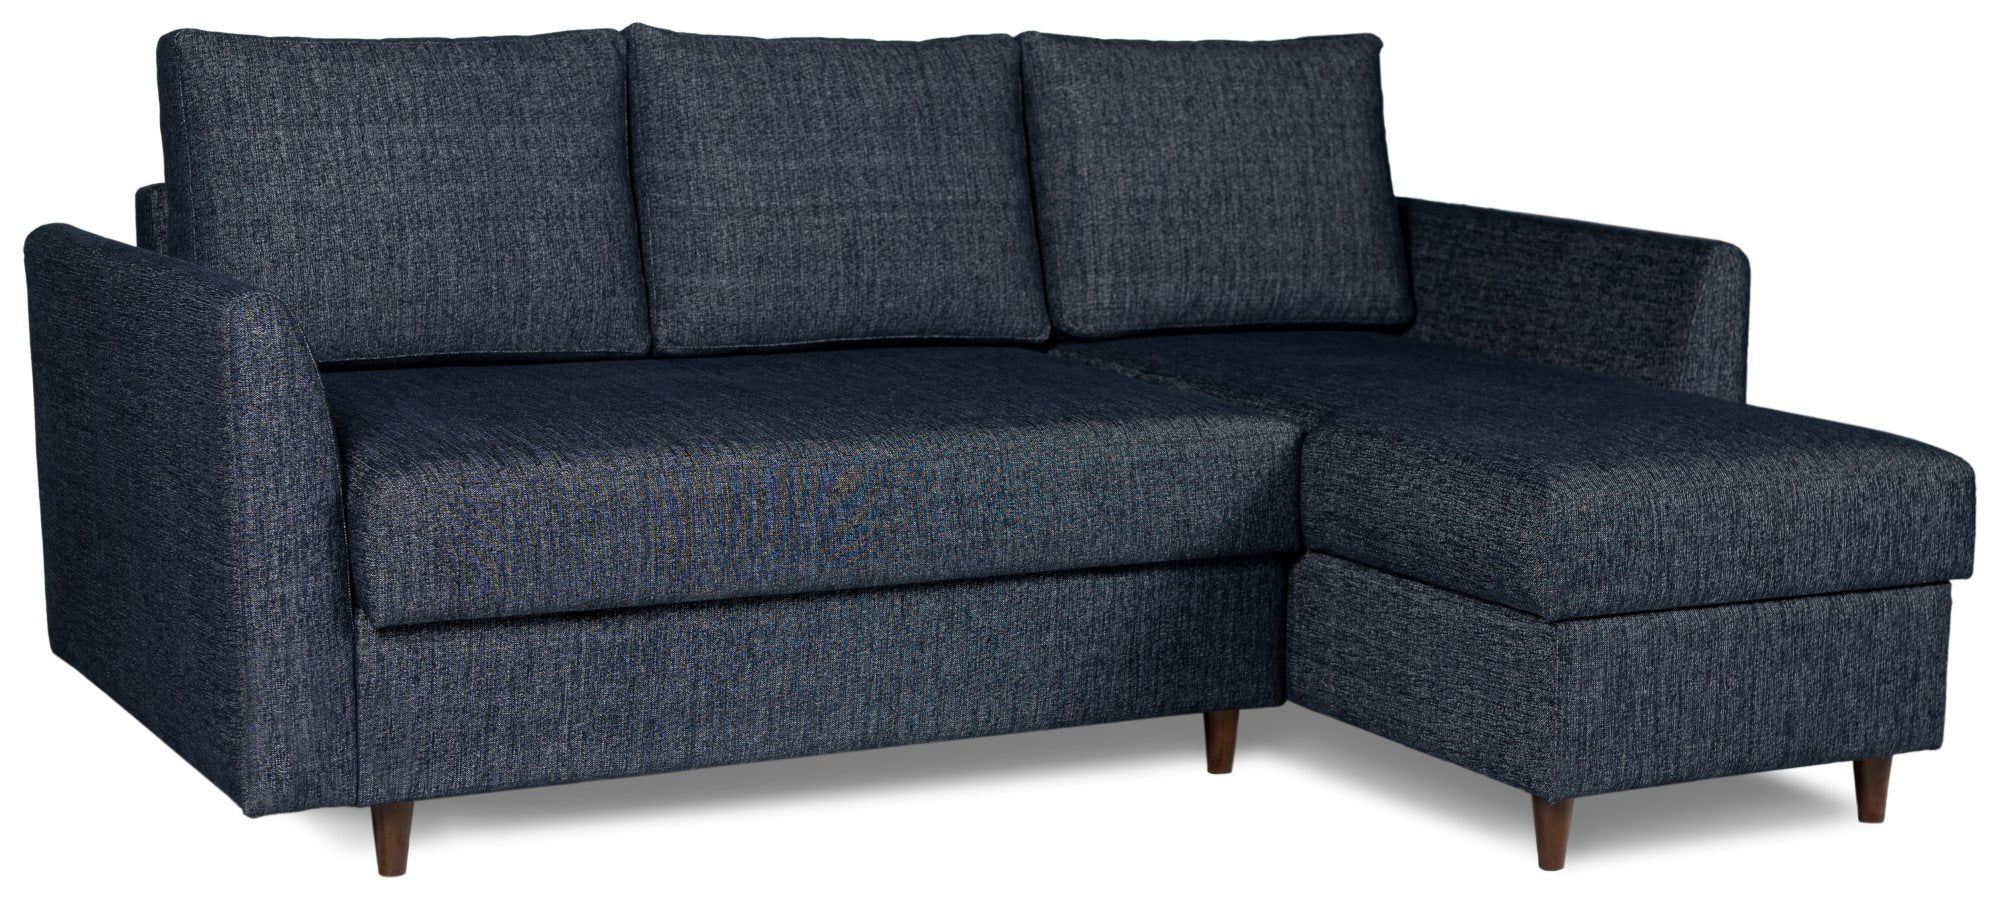 Brixham corner sofa bed in blue